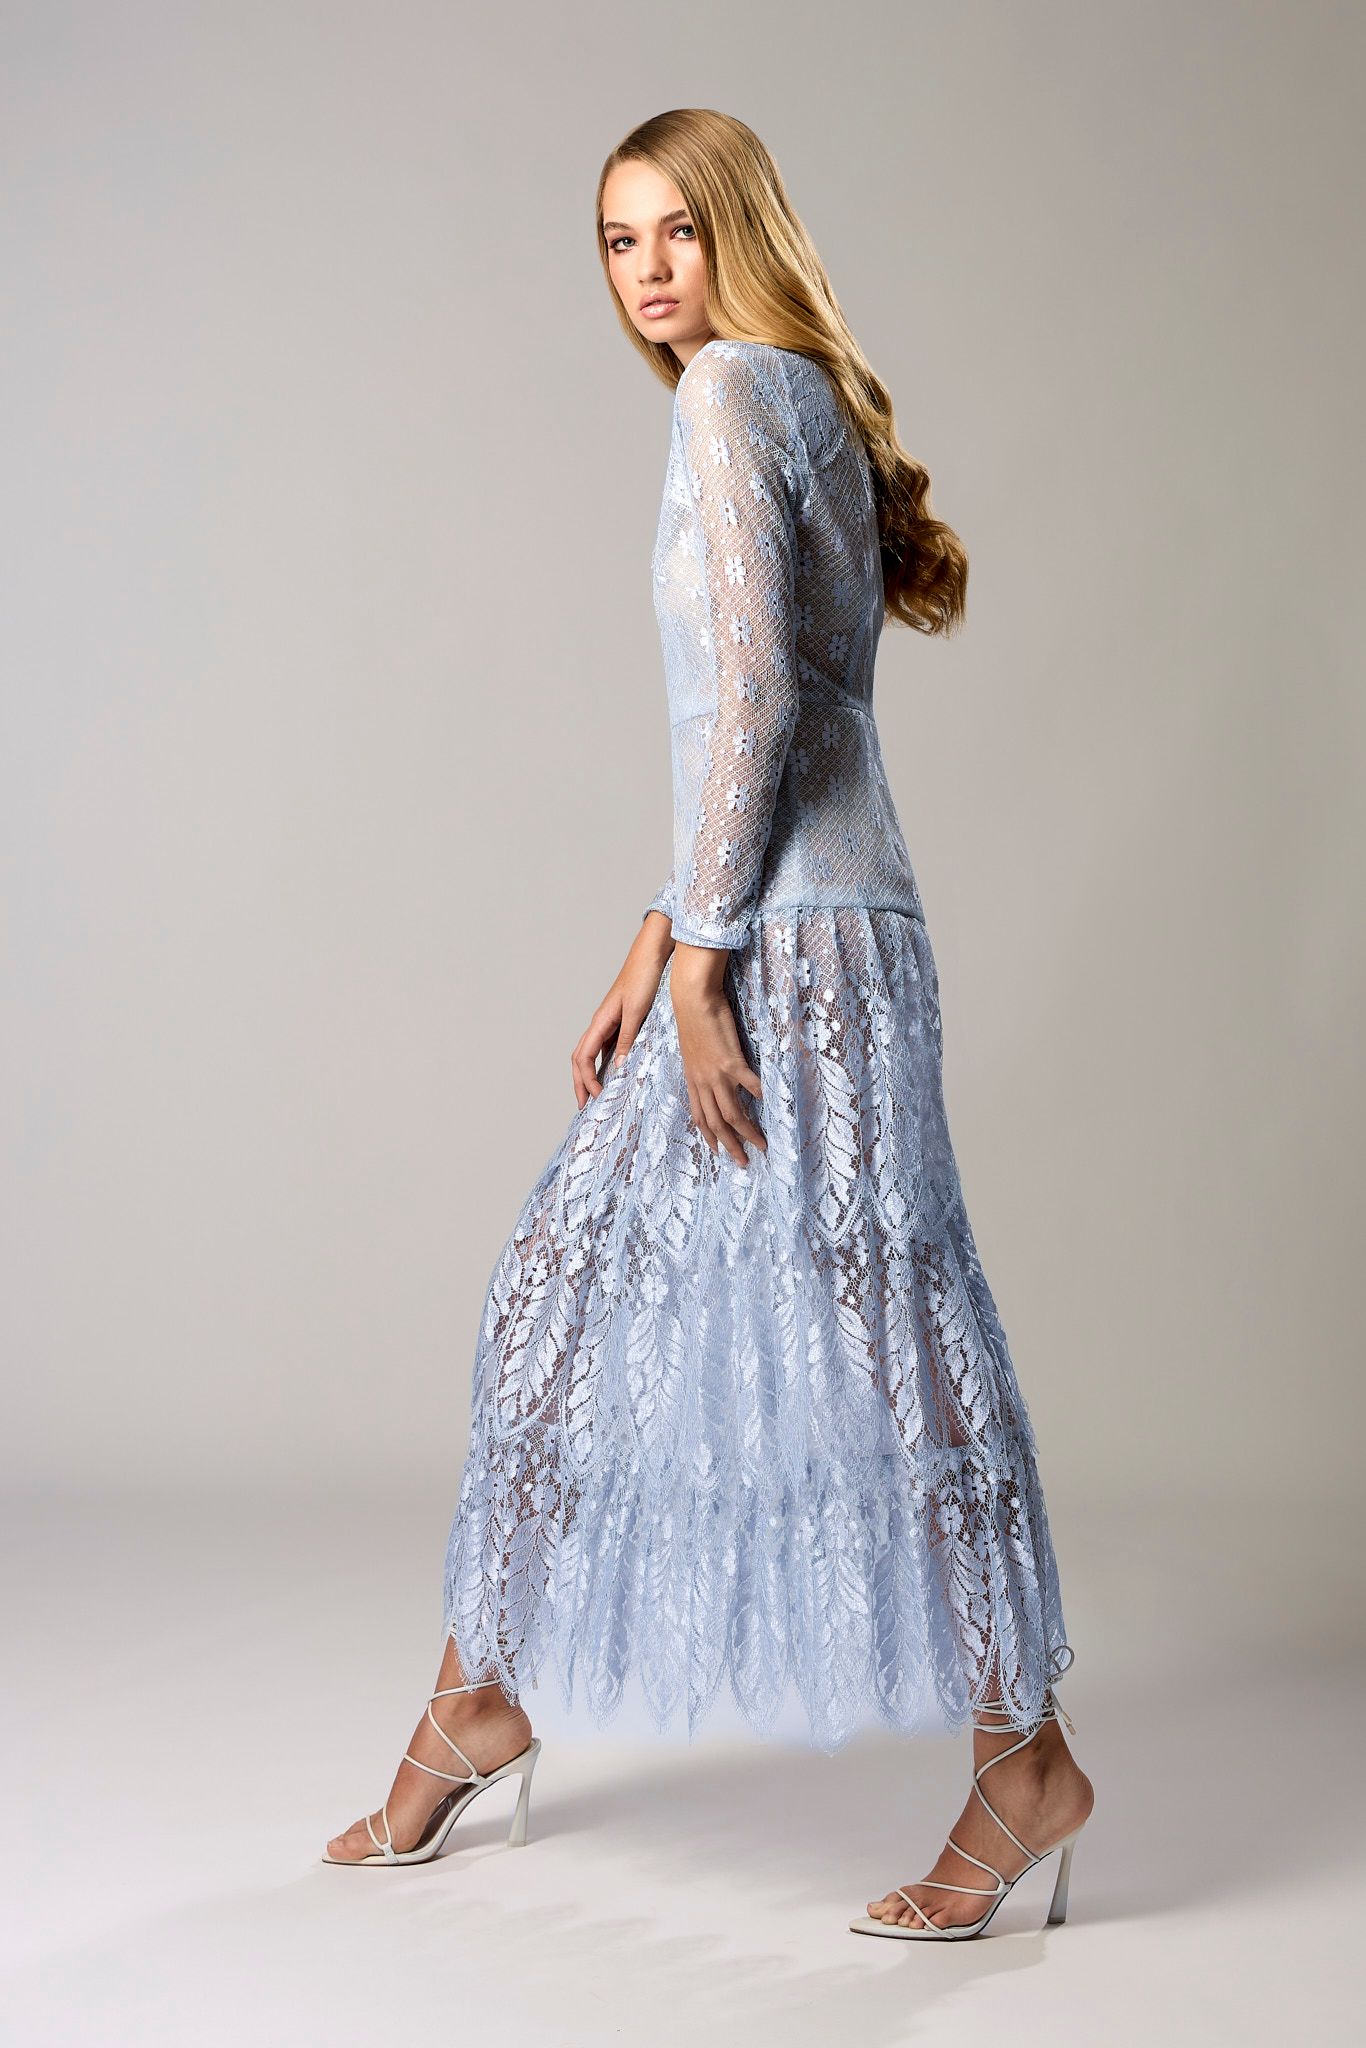 International top model wearing a elegant blue dress for NY Fashion week.